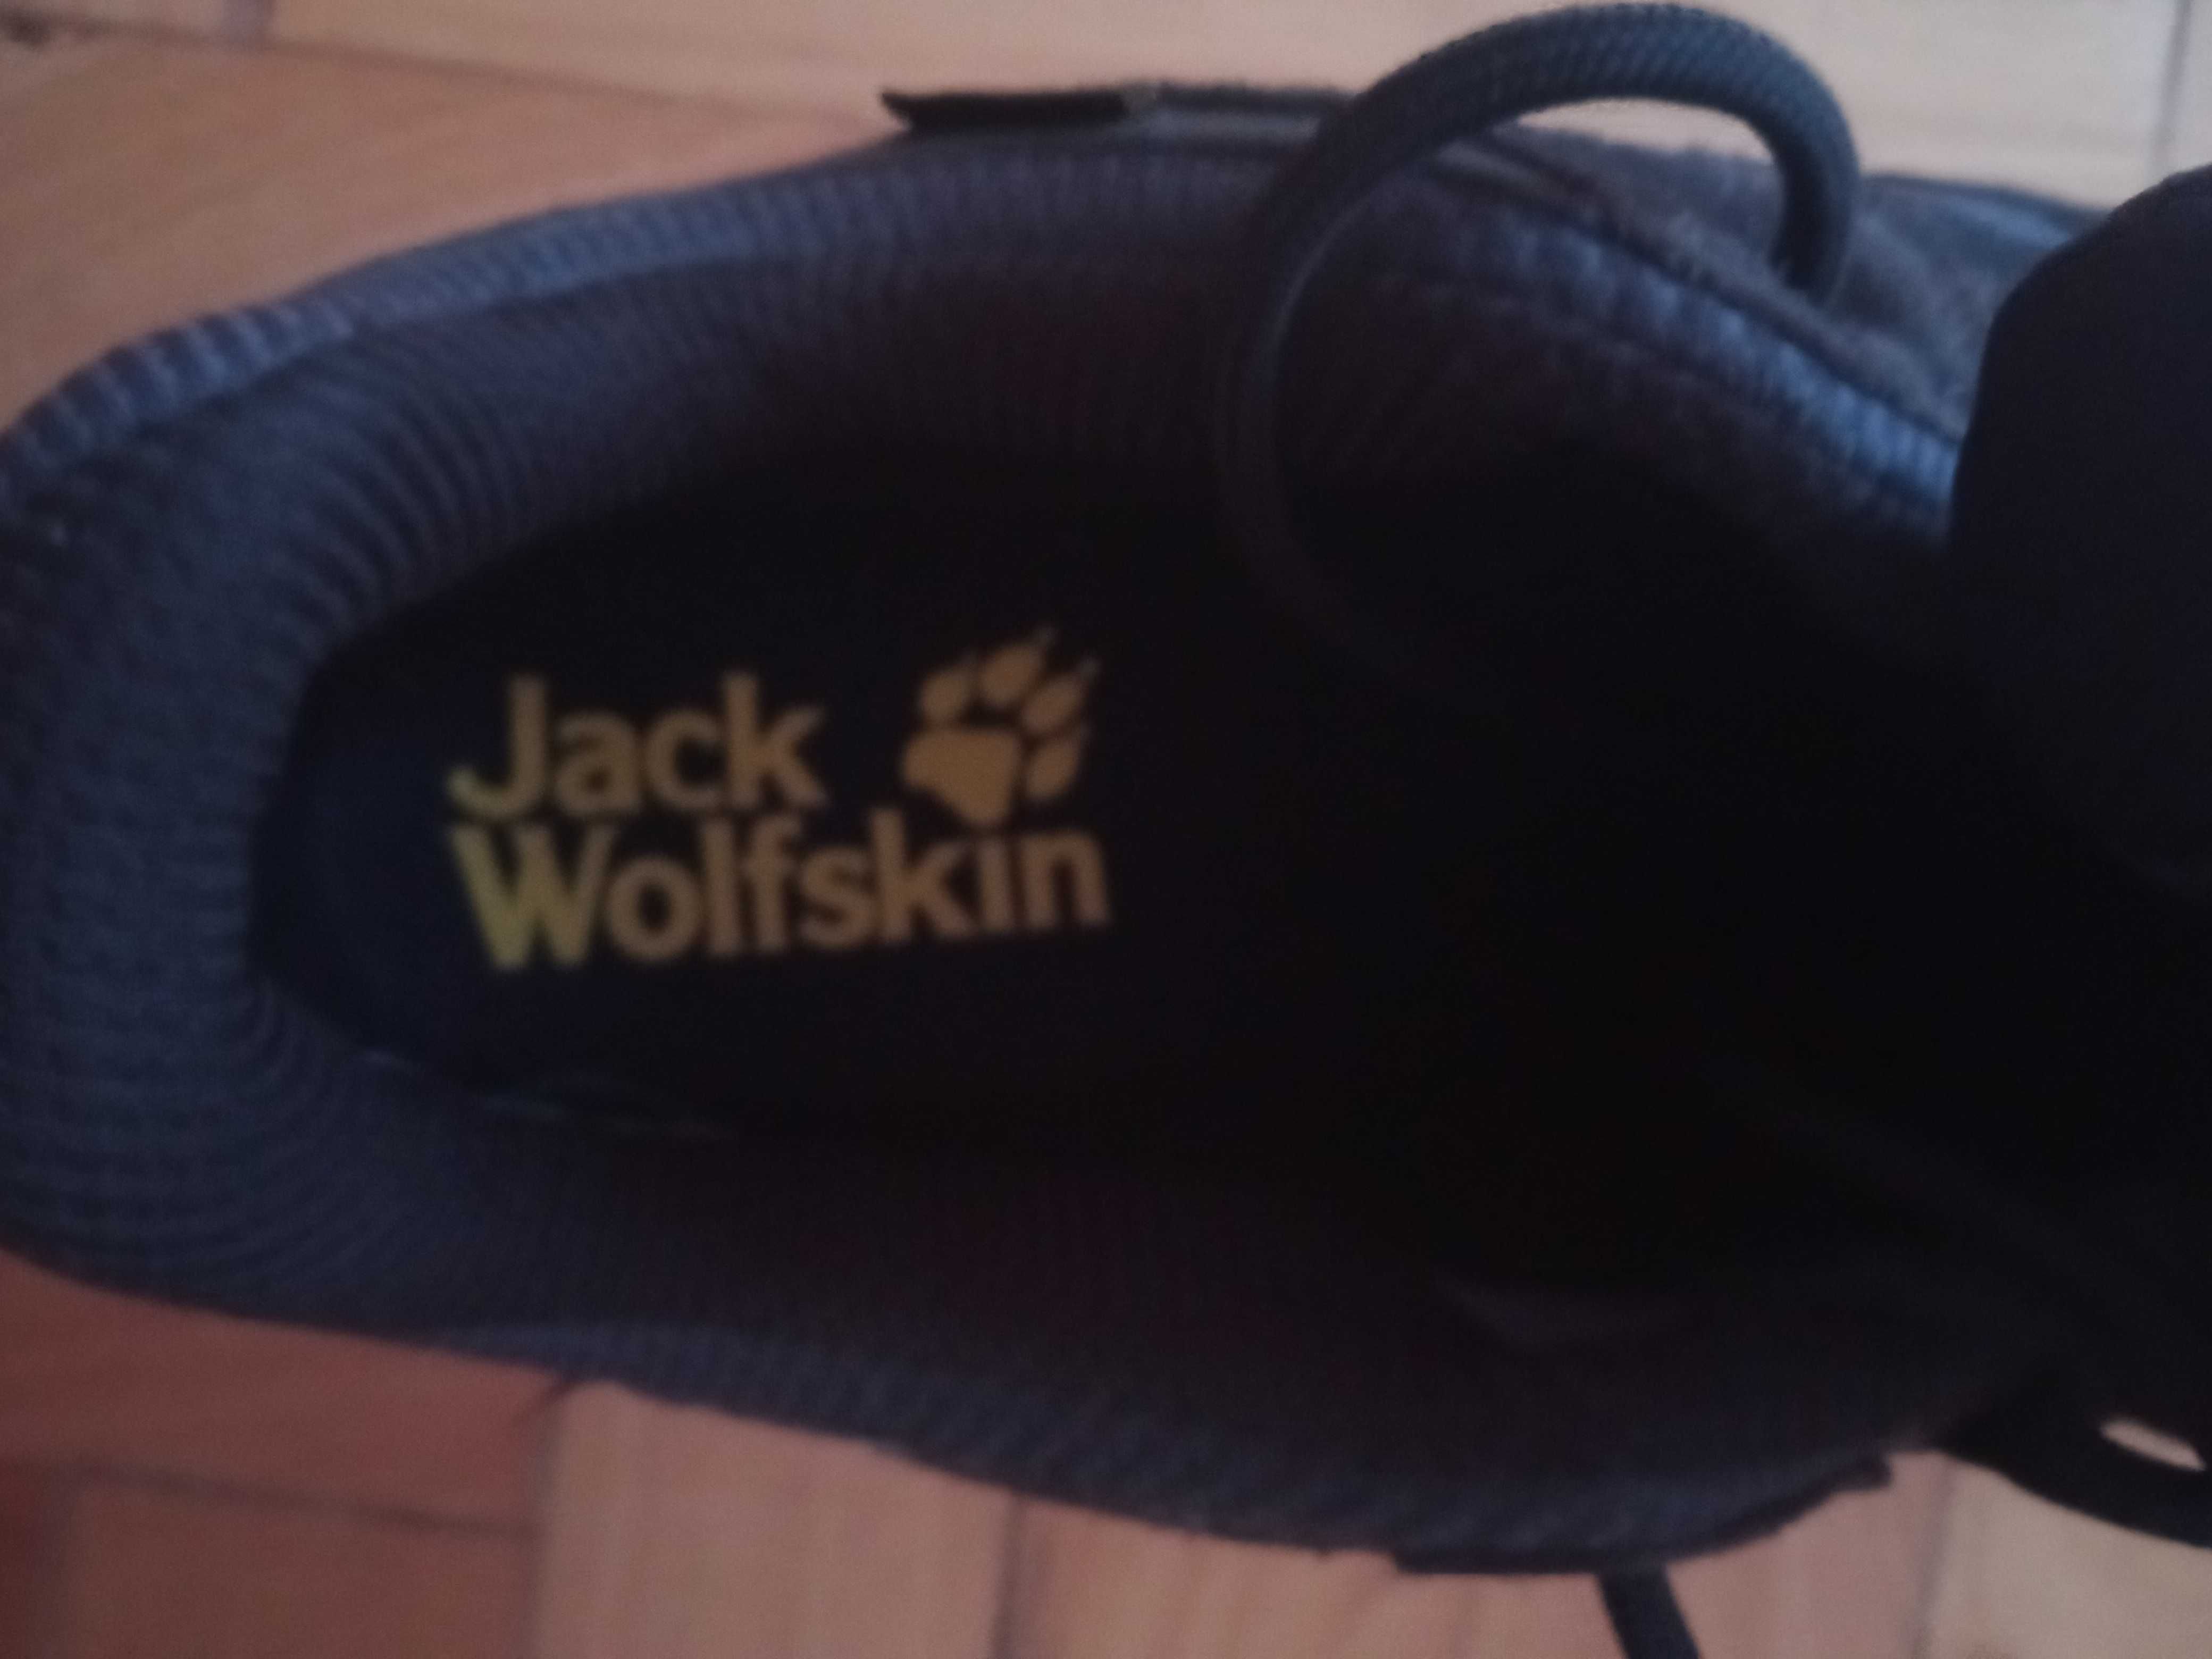 Туристически обувки Джак волфскин